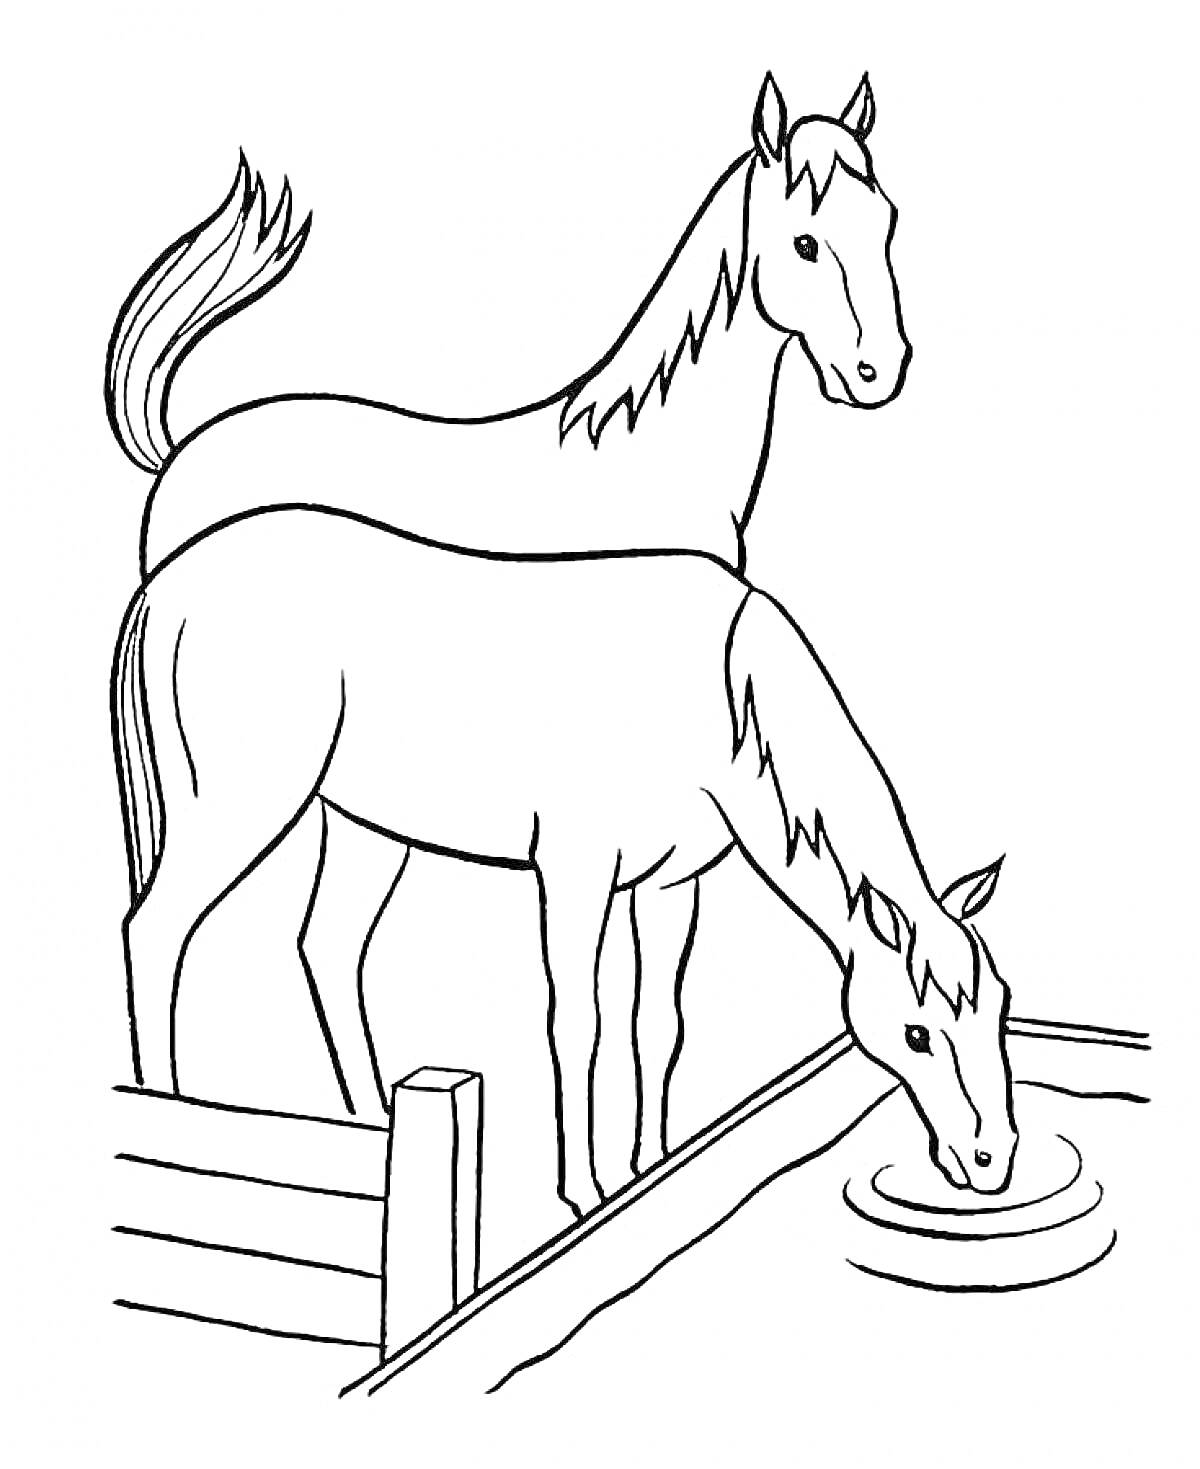 Две лошади возле забора, одна пьет воду из водоема